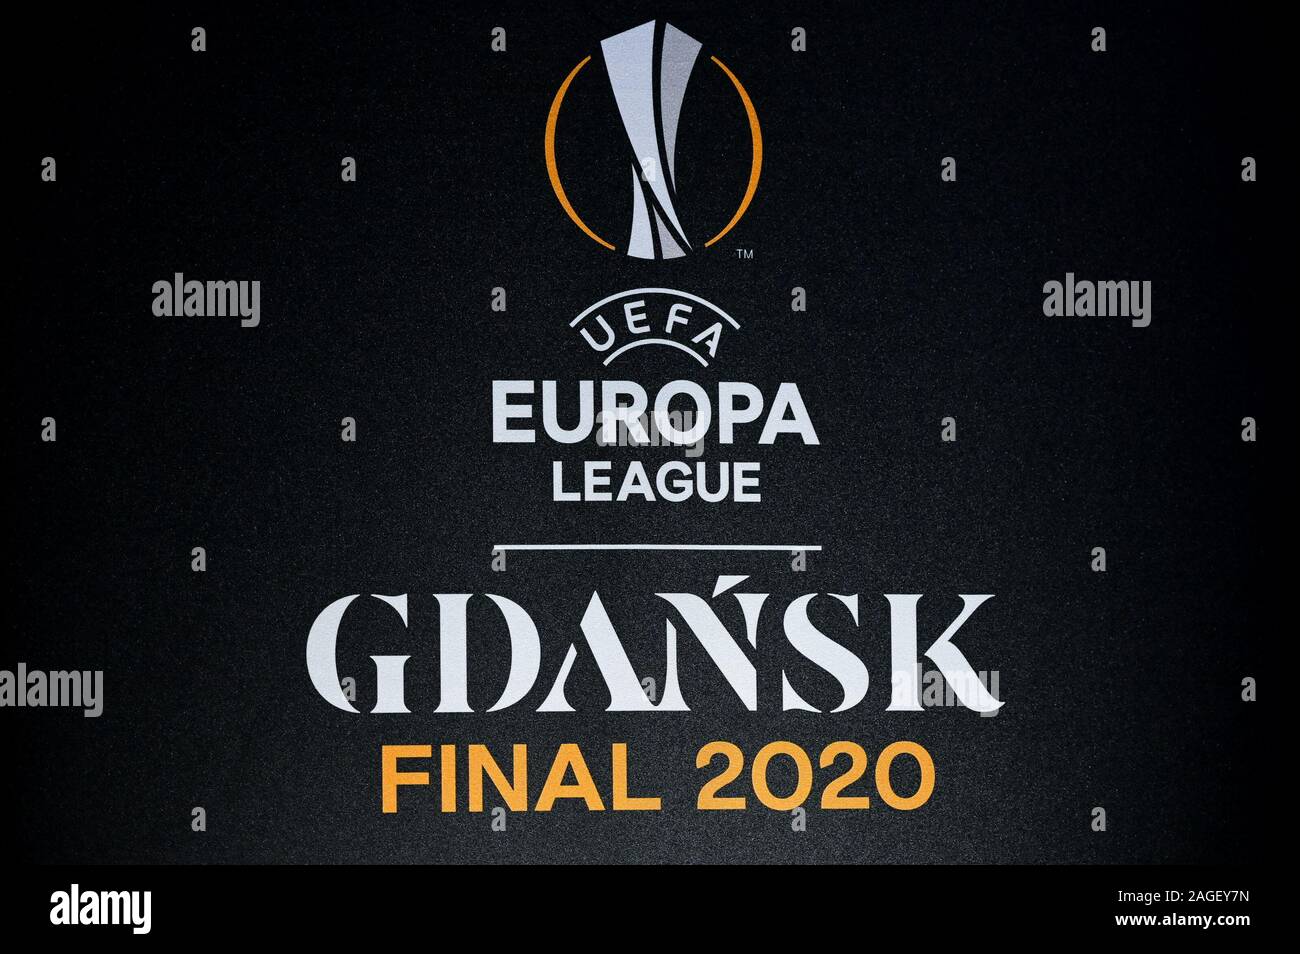 Gdansk Poland 18th Dec 2019 Uefa Europa League Final 2020 Gdansk Logo The 2020 Uefa Europa